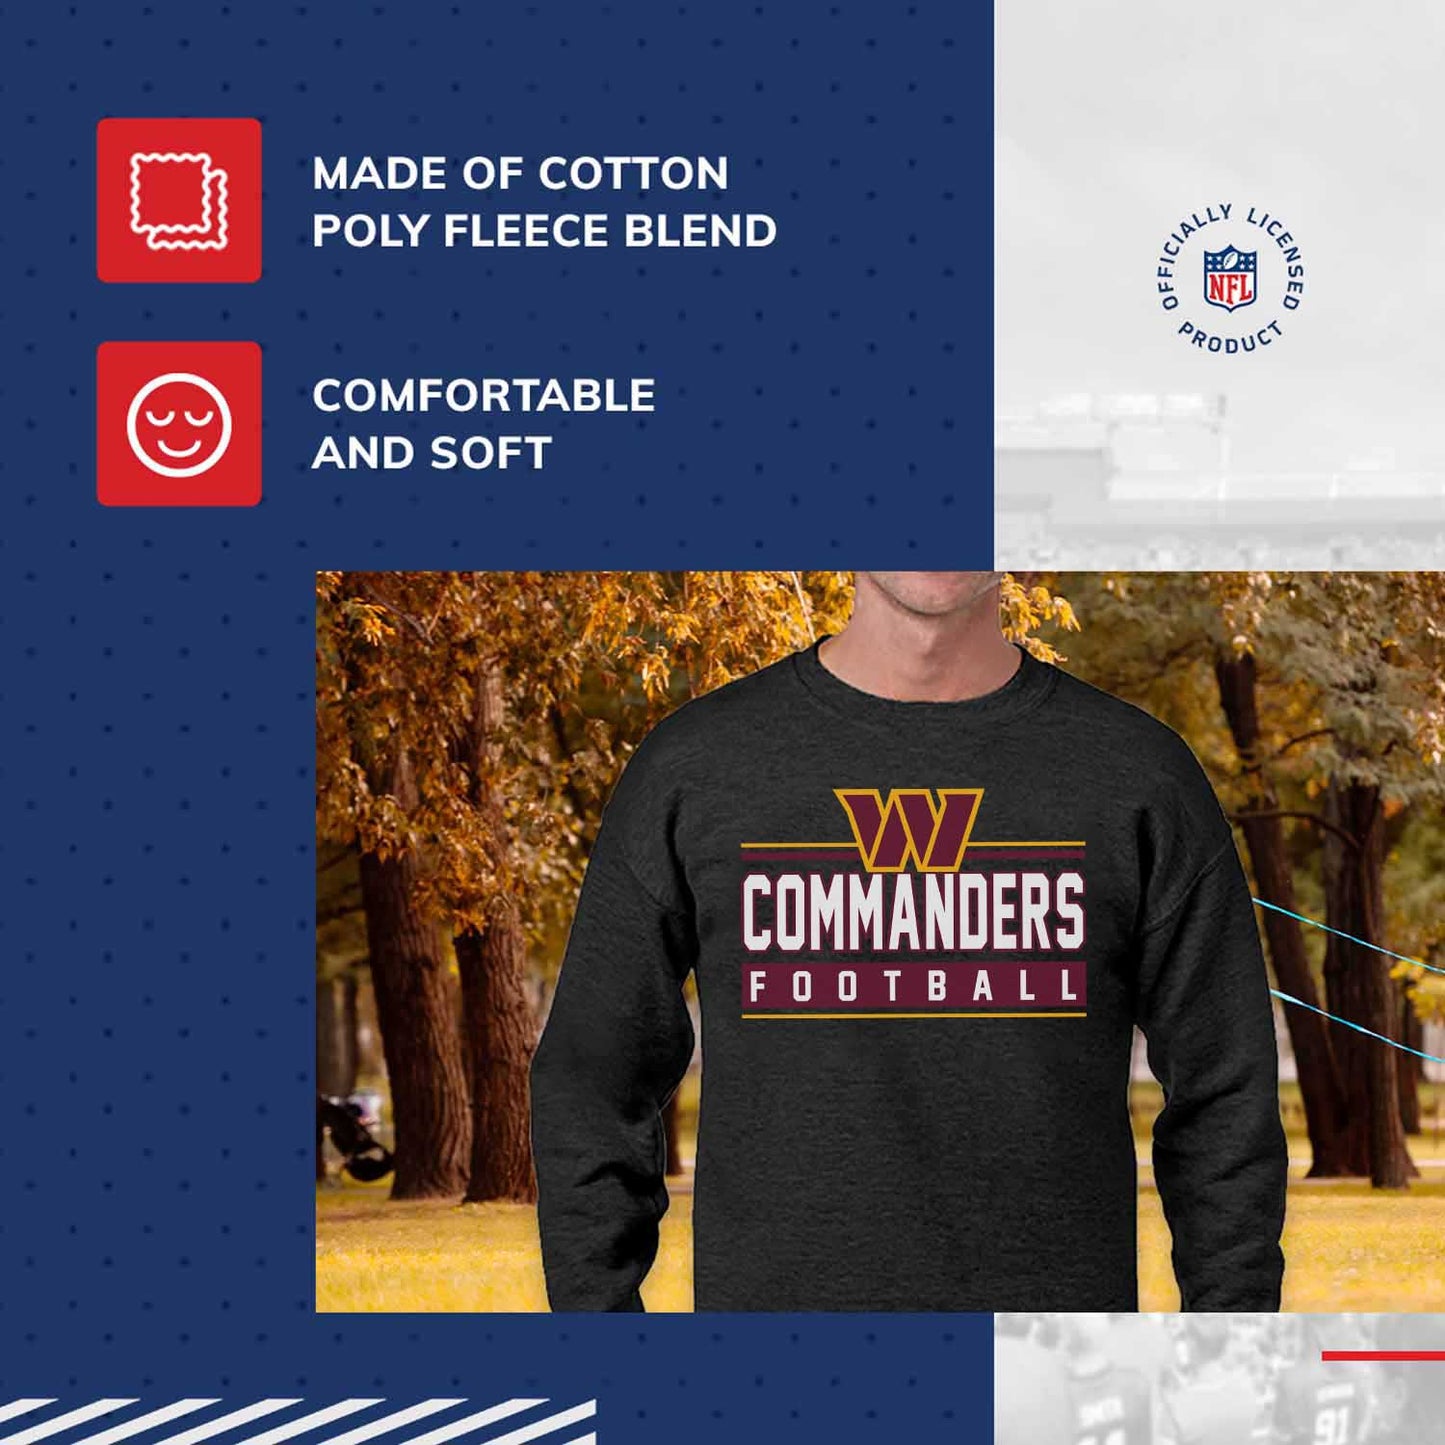 Washington Commanders NFL Adult True Fan Crewneck Sweatshirt - Charcoal